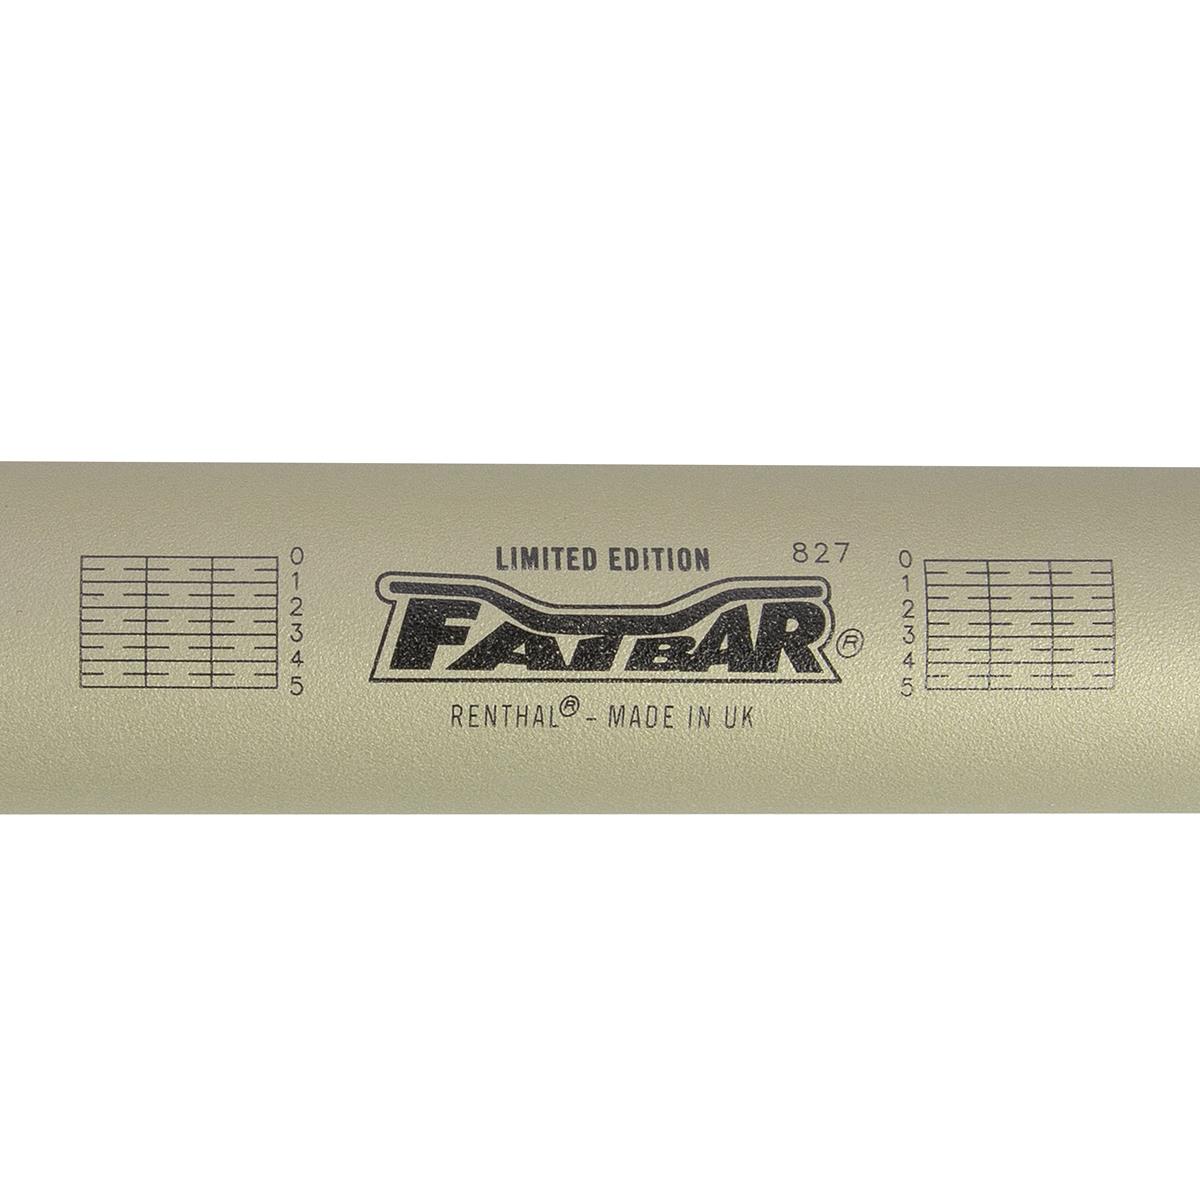 Renthal Handlebar Fatbar 827, 28.6mm, Limited Edition Hard